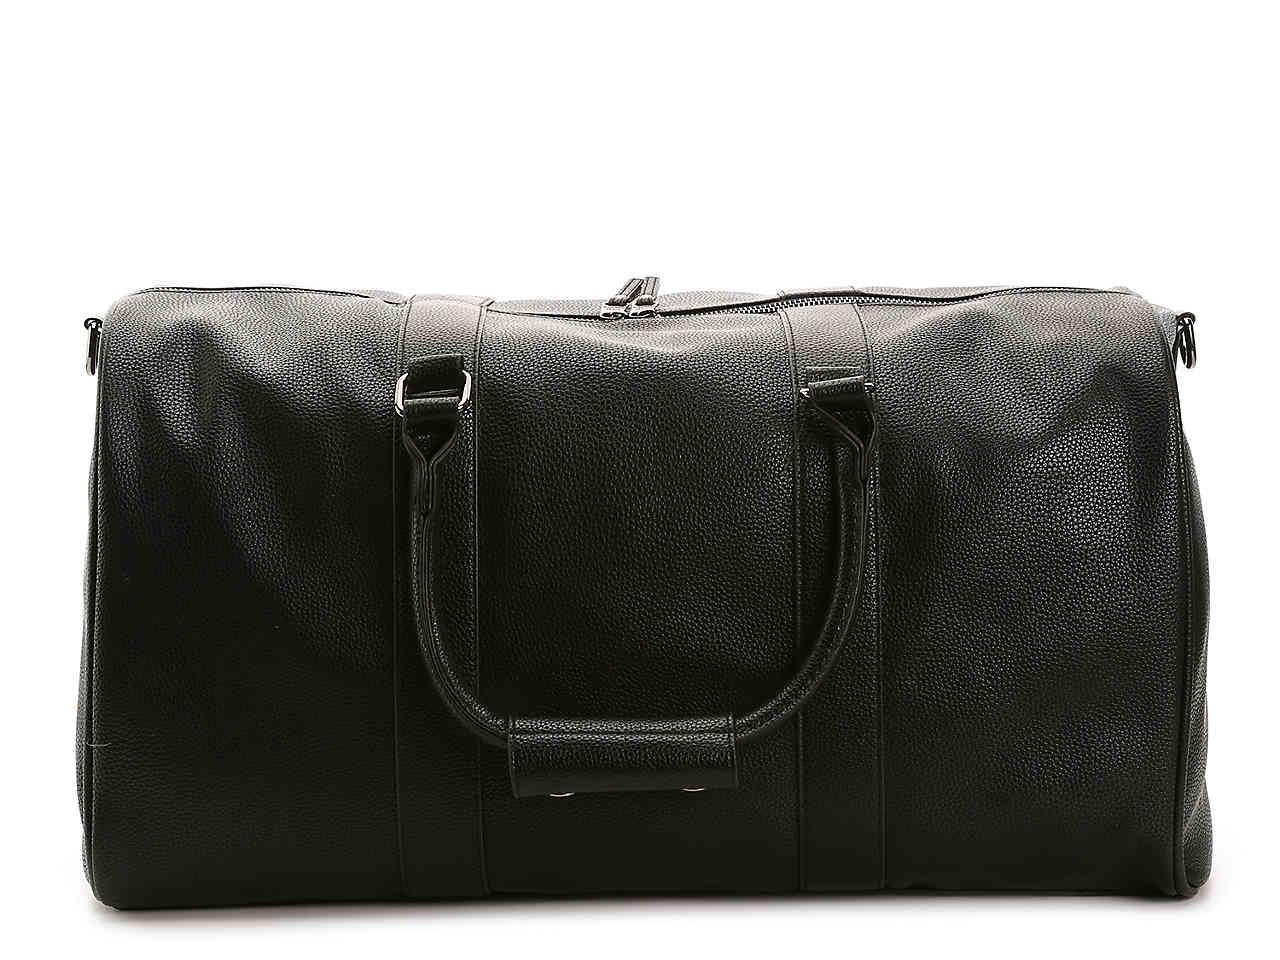 Steve Madden Duffel Weekender Bag in Black for Men - Lyst